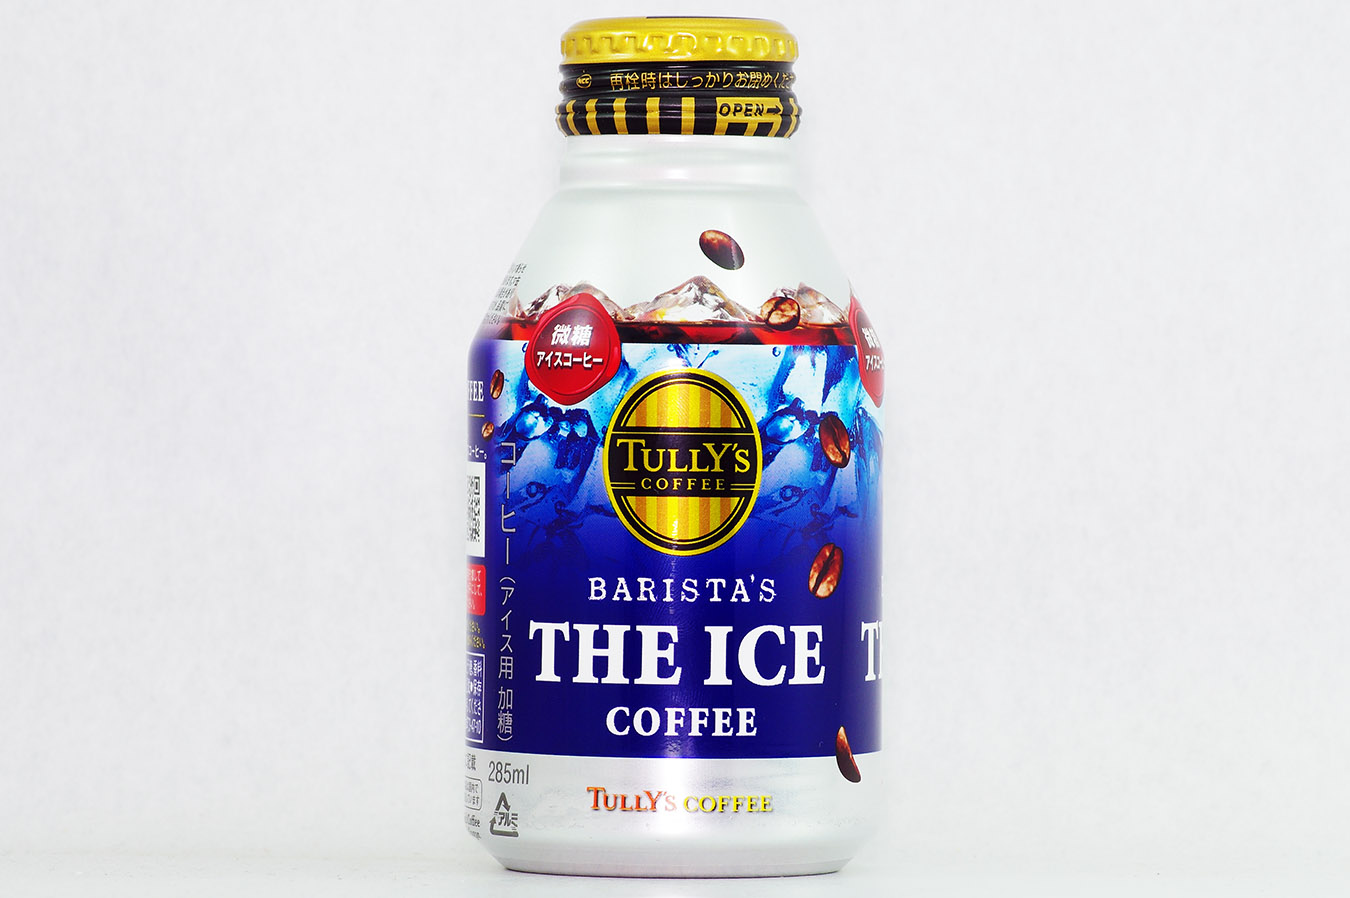 TULLY'S COFFEE BARISTA'S COFFEE 微糖 285mlボトル缶 2015年